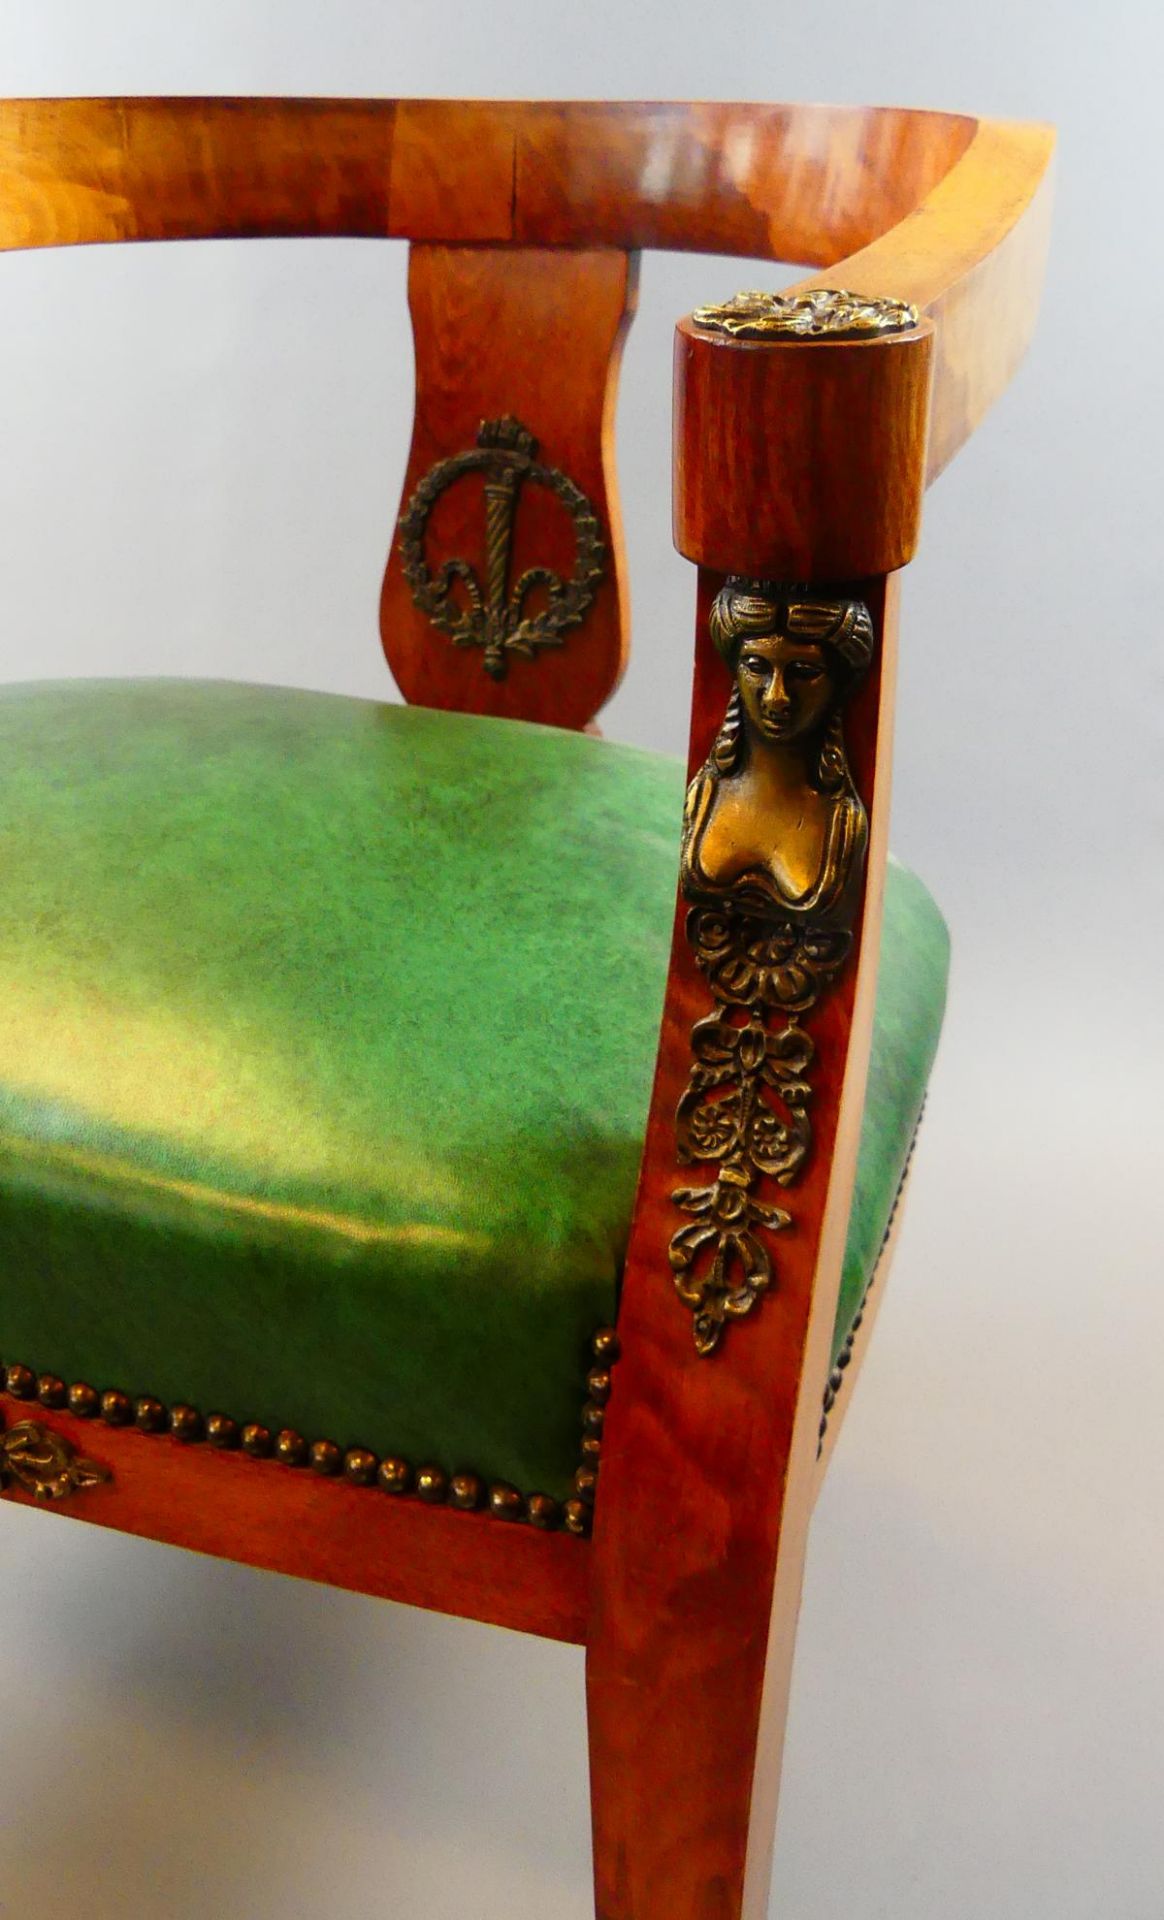 Armlehnstuhl mit grünem Lederbezug, Messingverzierungen, vorgestellte Karyatiden, - Bild 2 aus 4